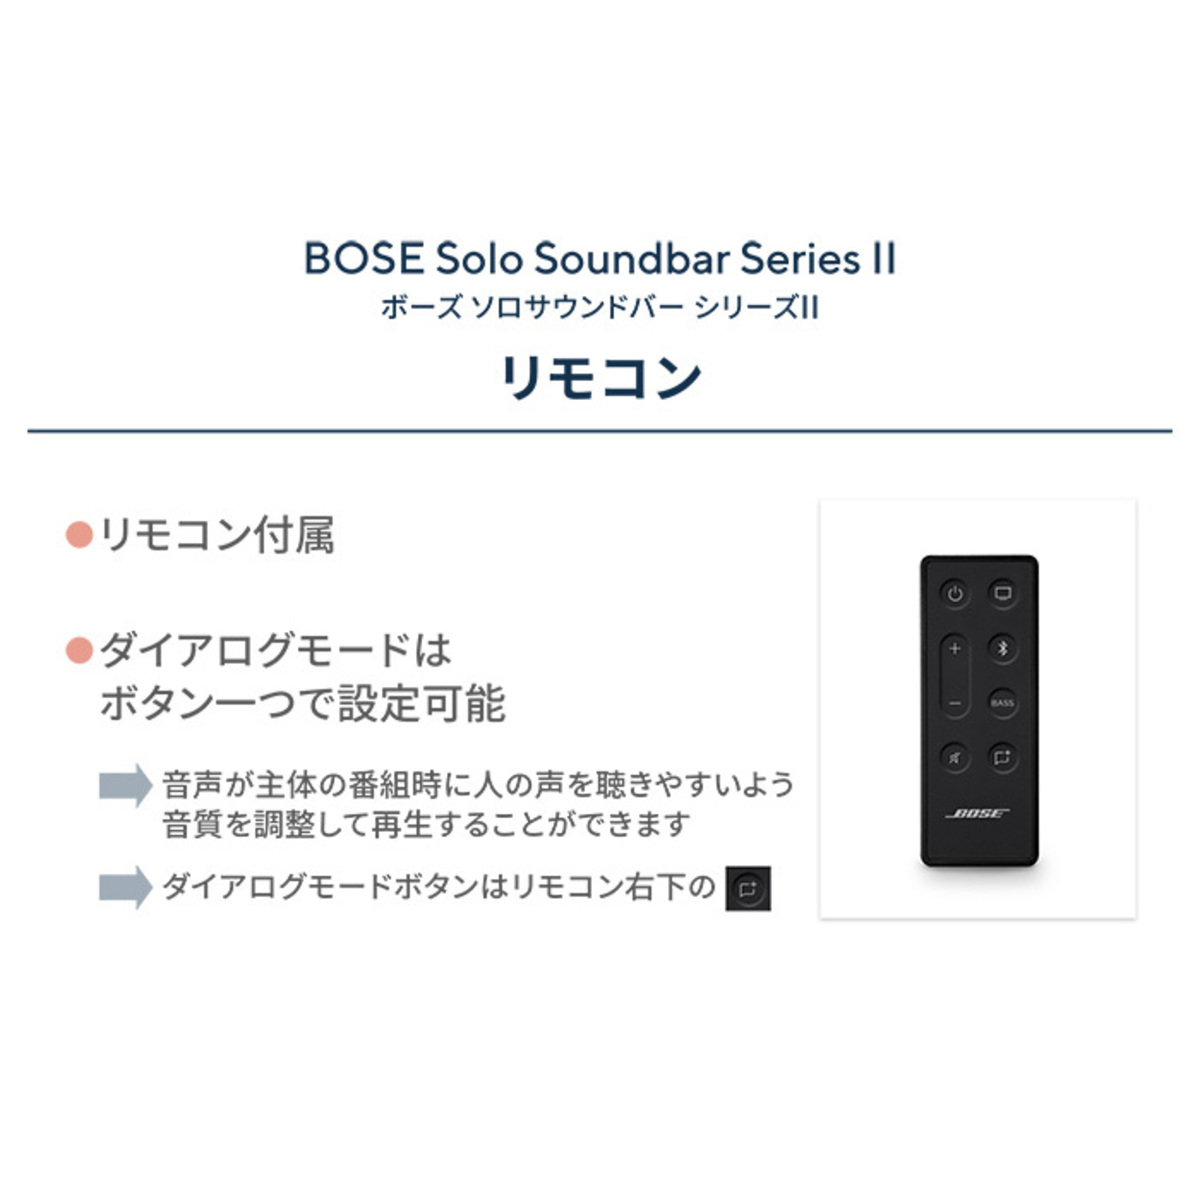 BOSE ソロ サウンドバー シリーズII BOSE（ボーズ） - QVC.jp